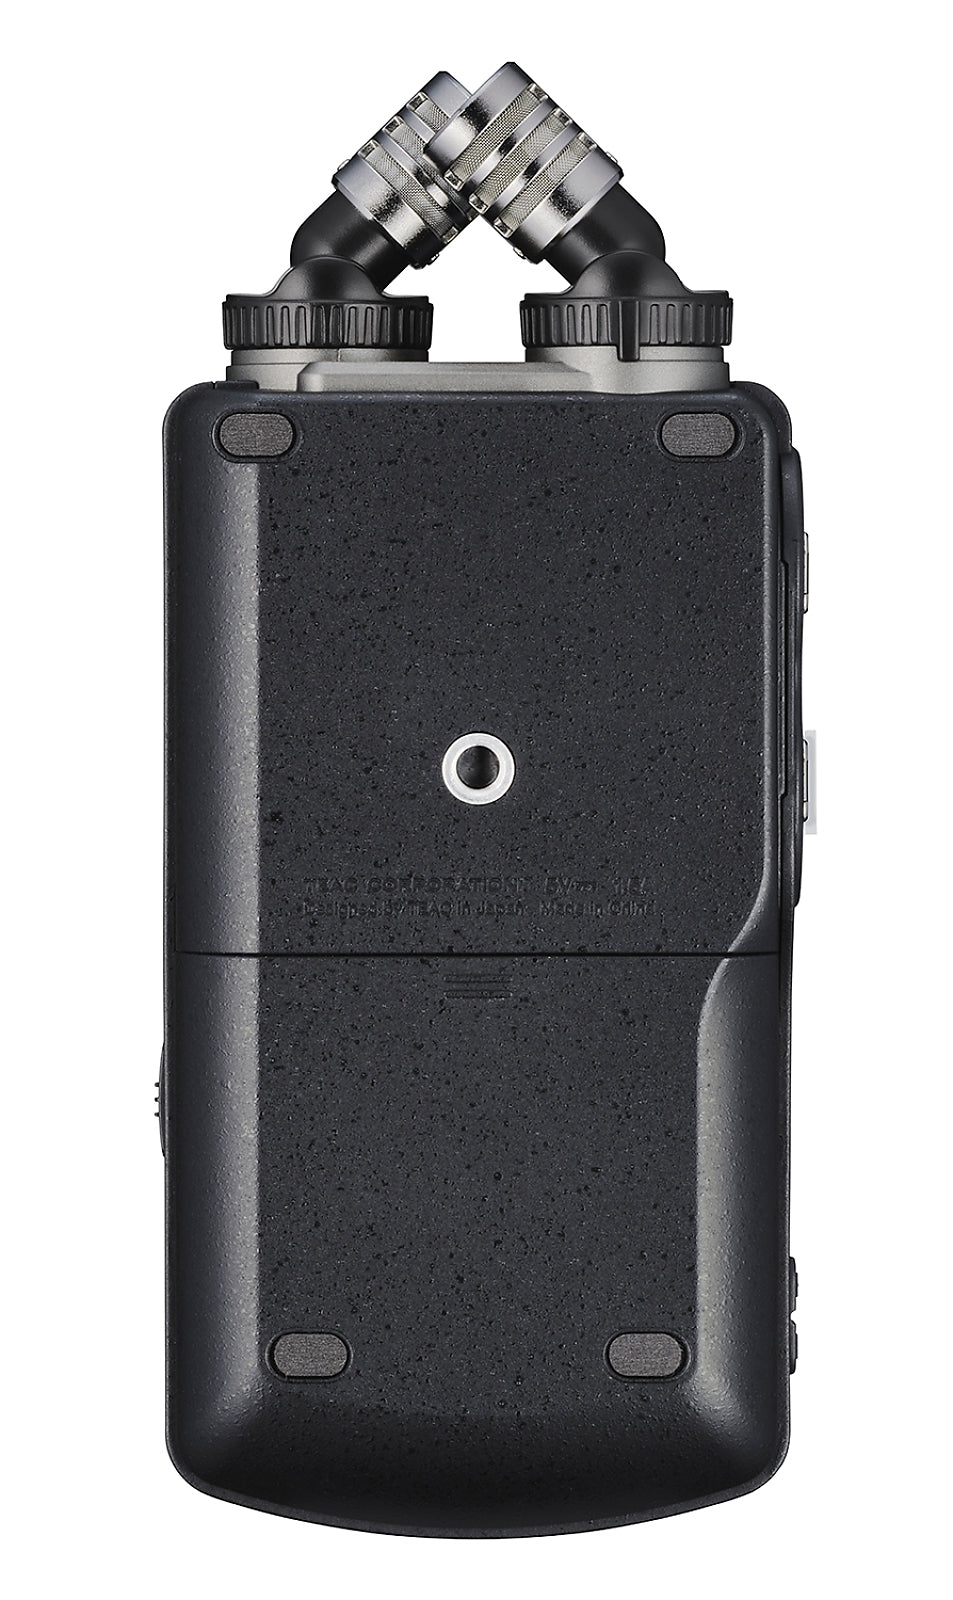 Tascam Portacapture X6 High-Resolution Multi-Track Handheld Recorder